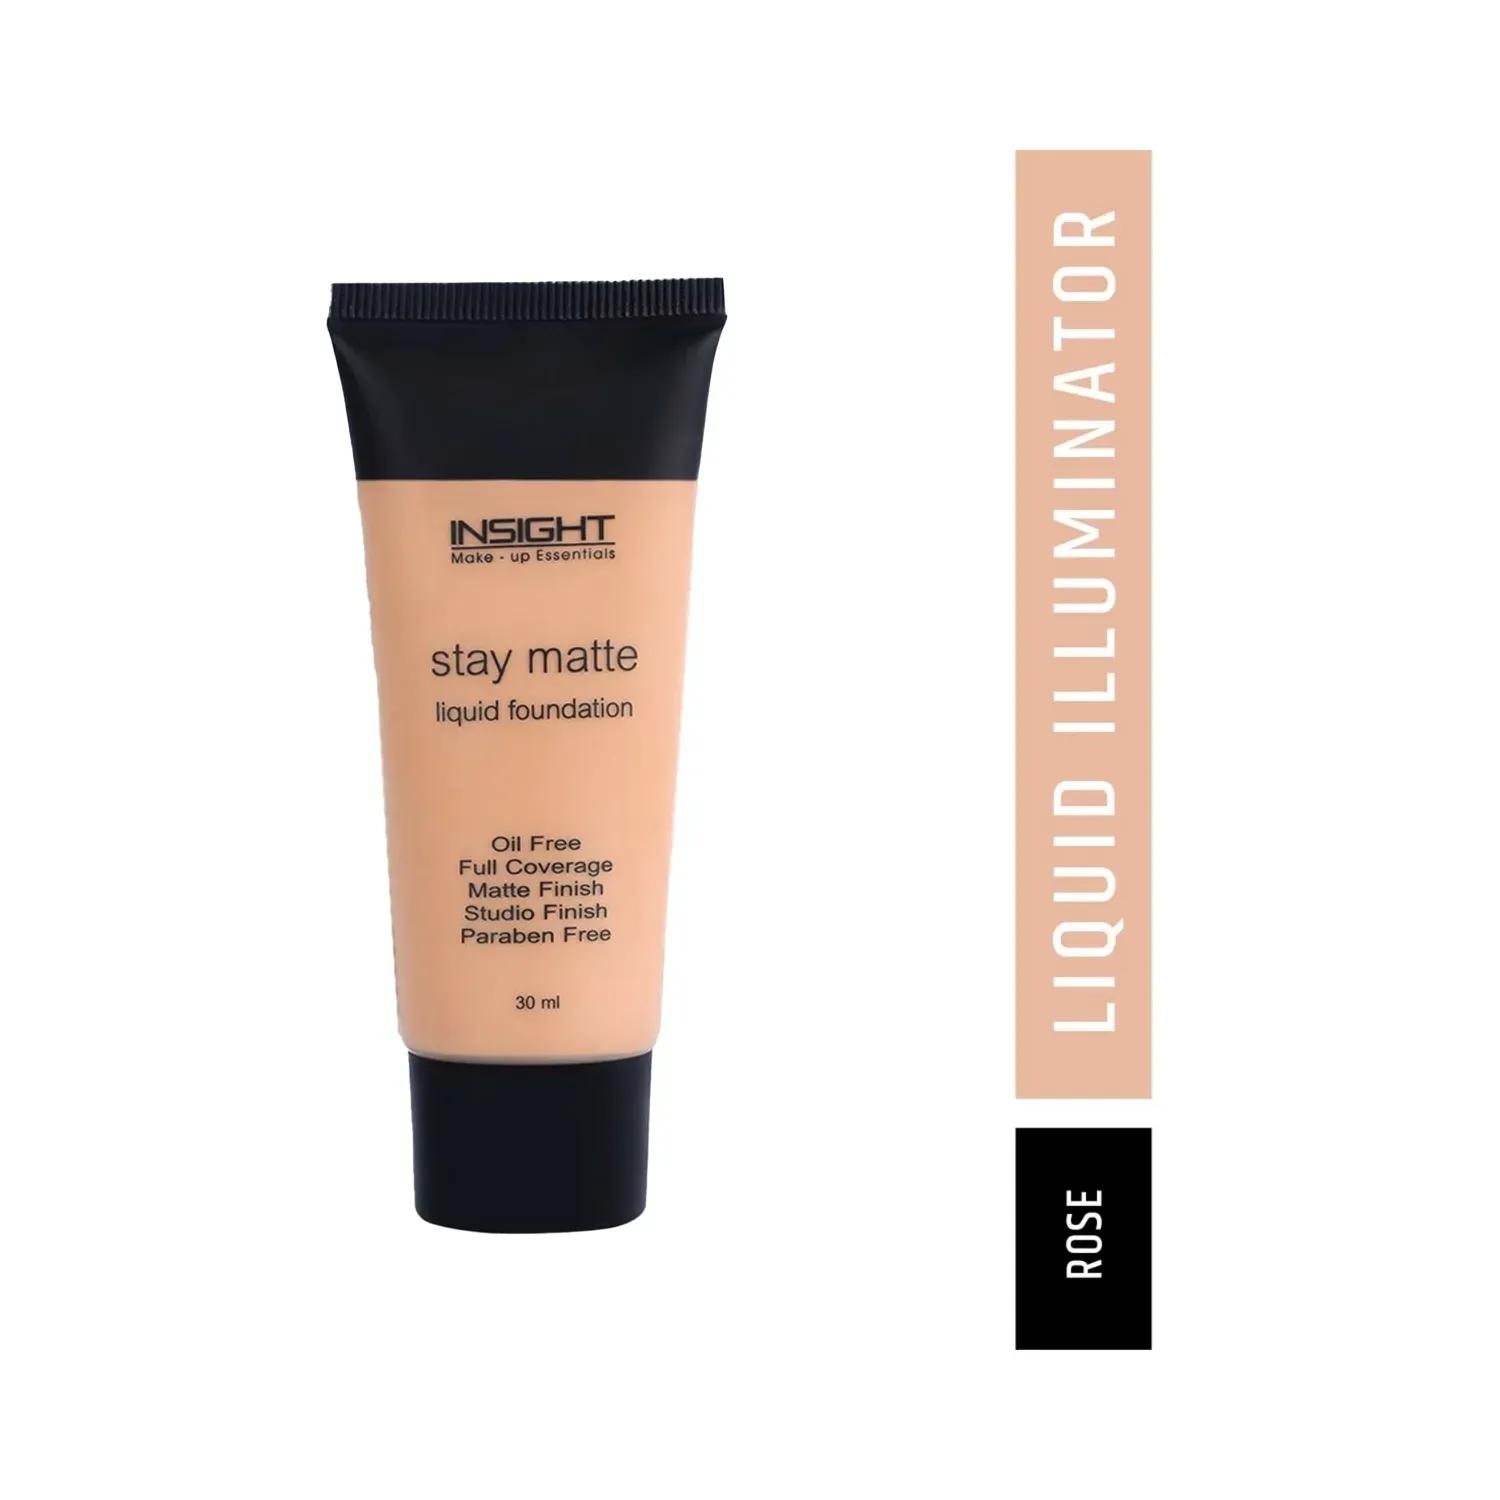 insight cosmetics stay matte liquid foundation - rose beige (30ml)